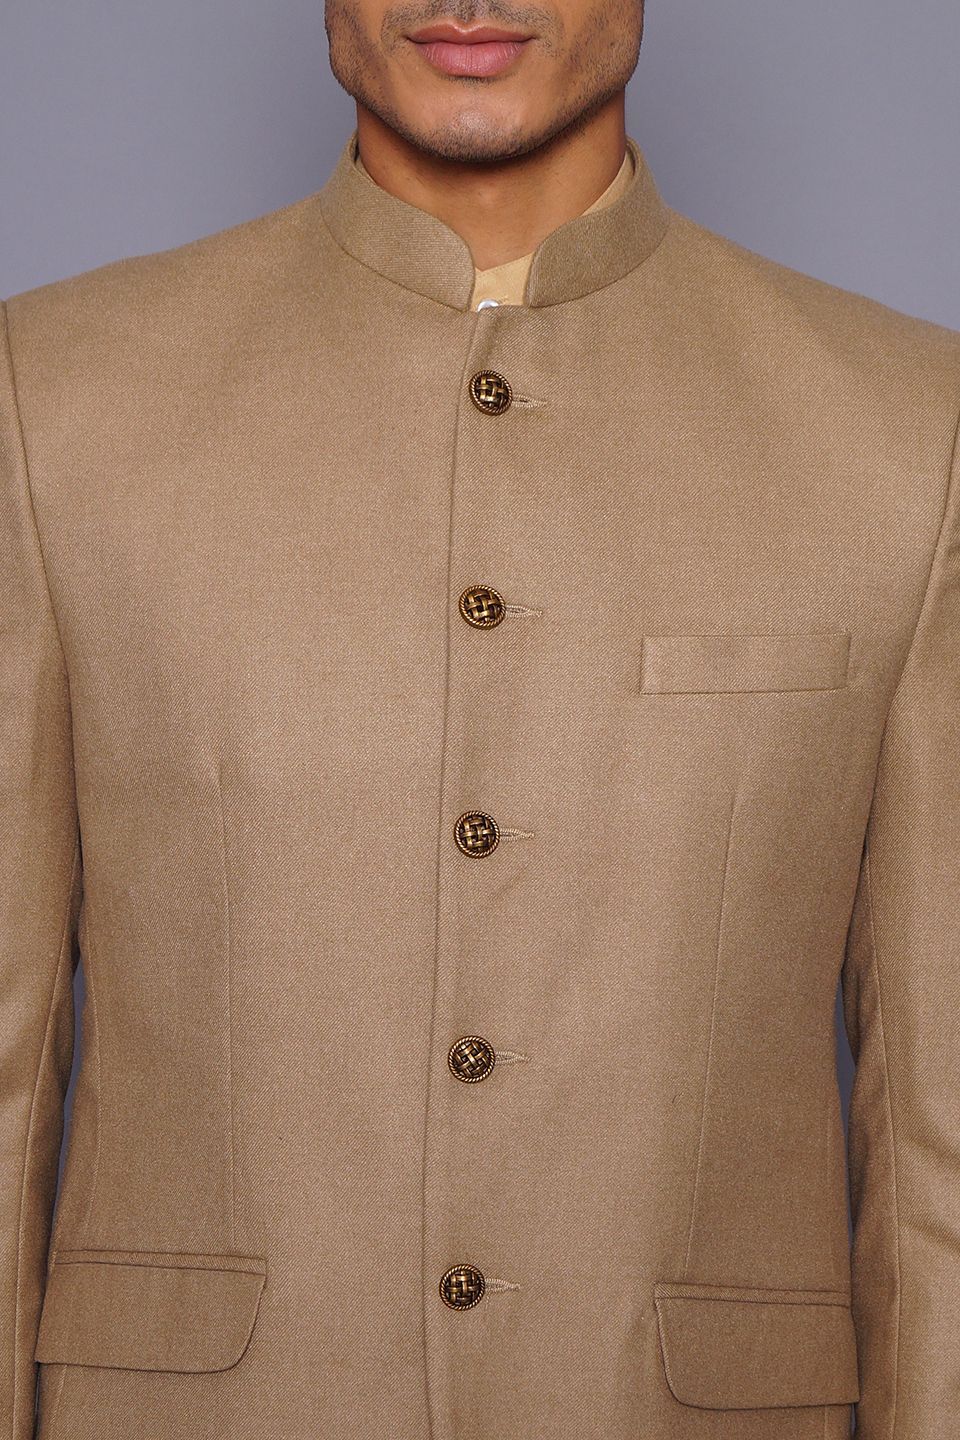 Wintage Men's Wool Casual and Festive Bandhgala Blazer : Beige